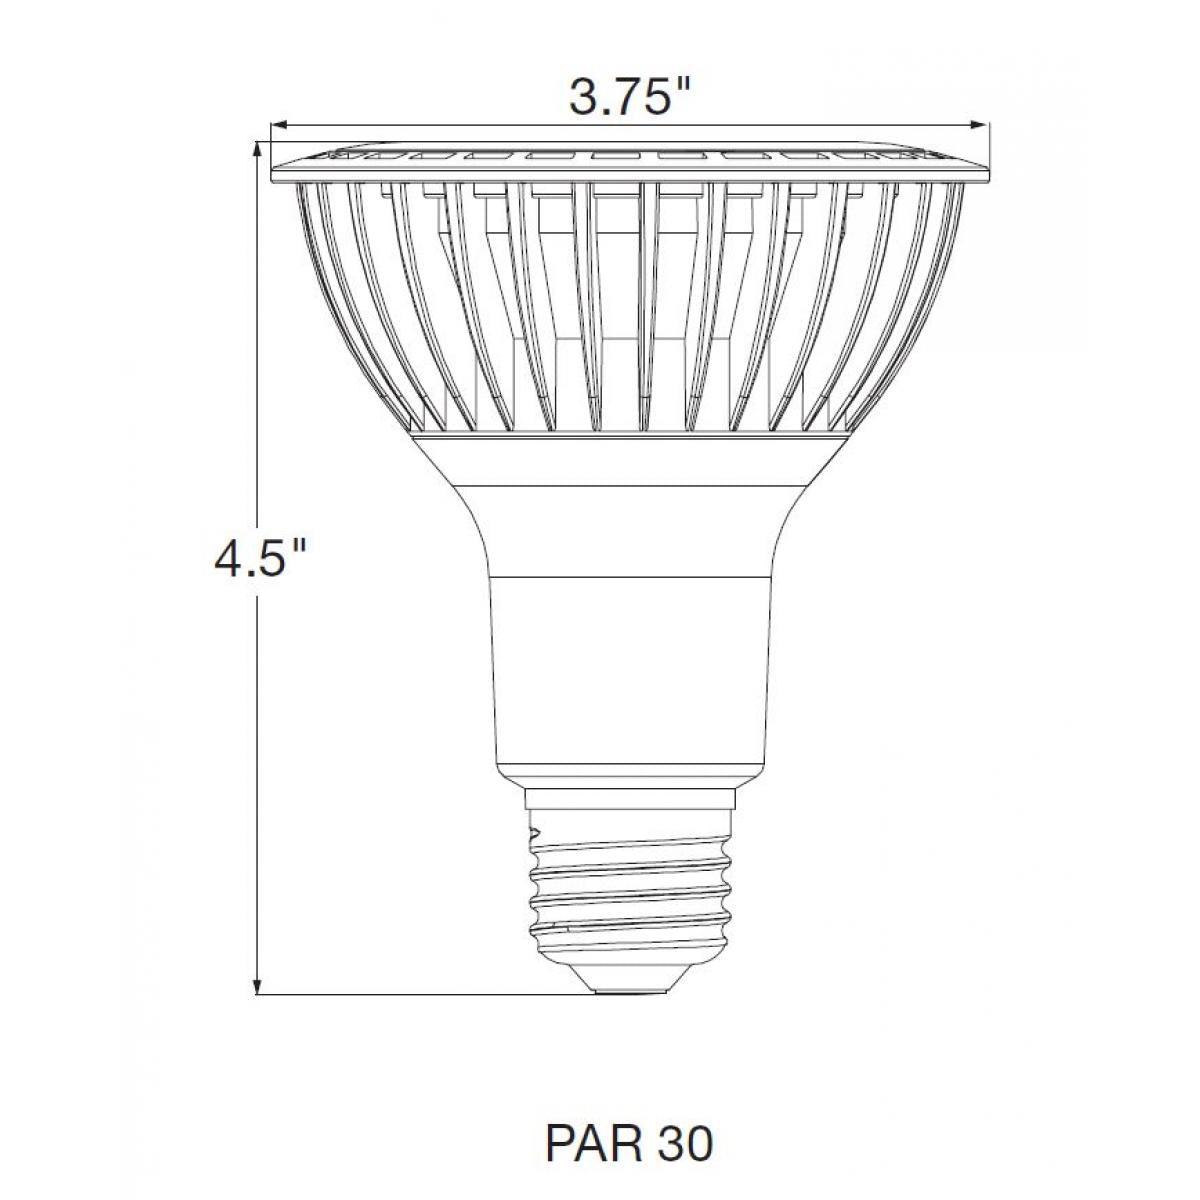 PAR30 Long Neck Reflector LED Bulb, 21 watt, 1800 Lumens, 4000K, E26 Medium Base, 40 Deg. Flood